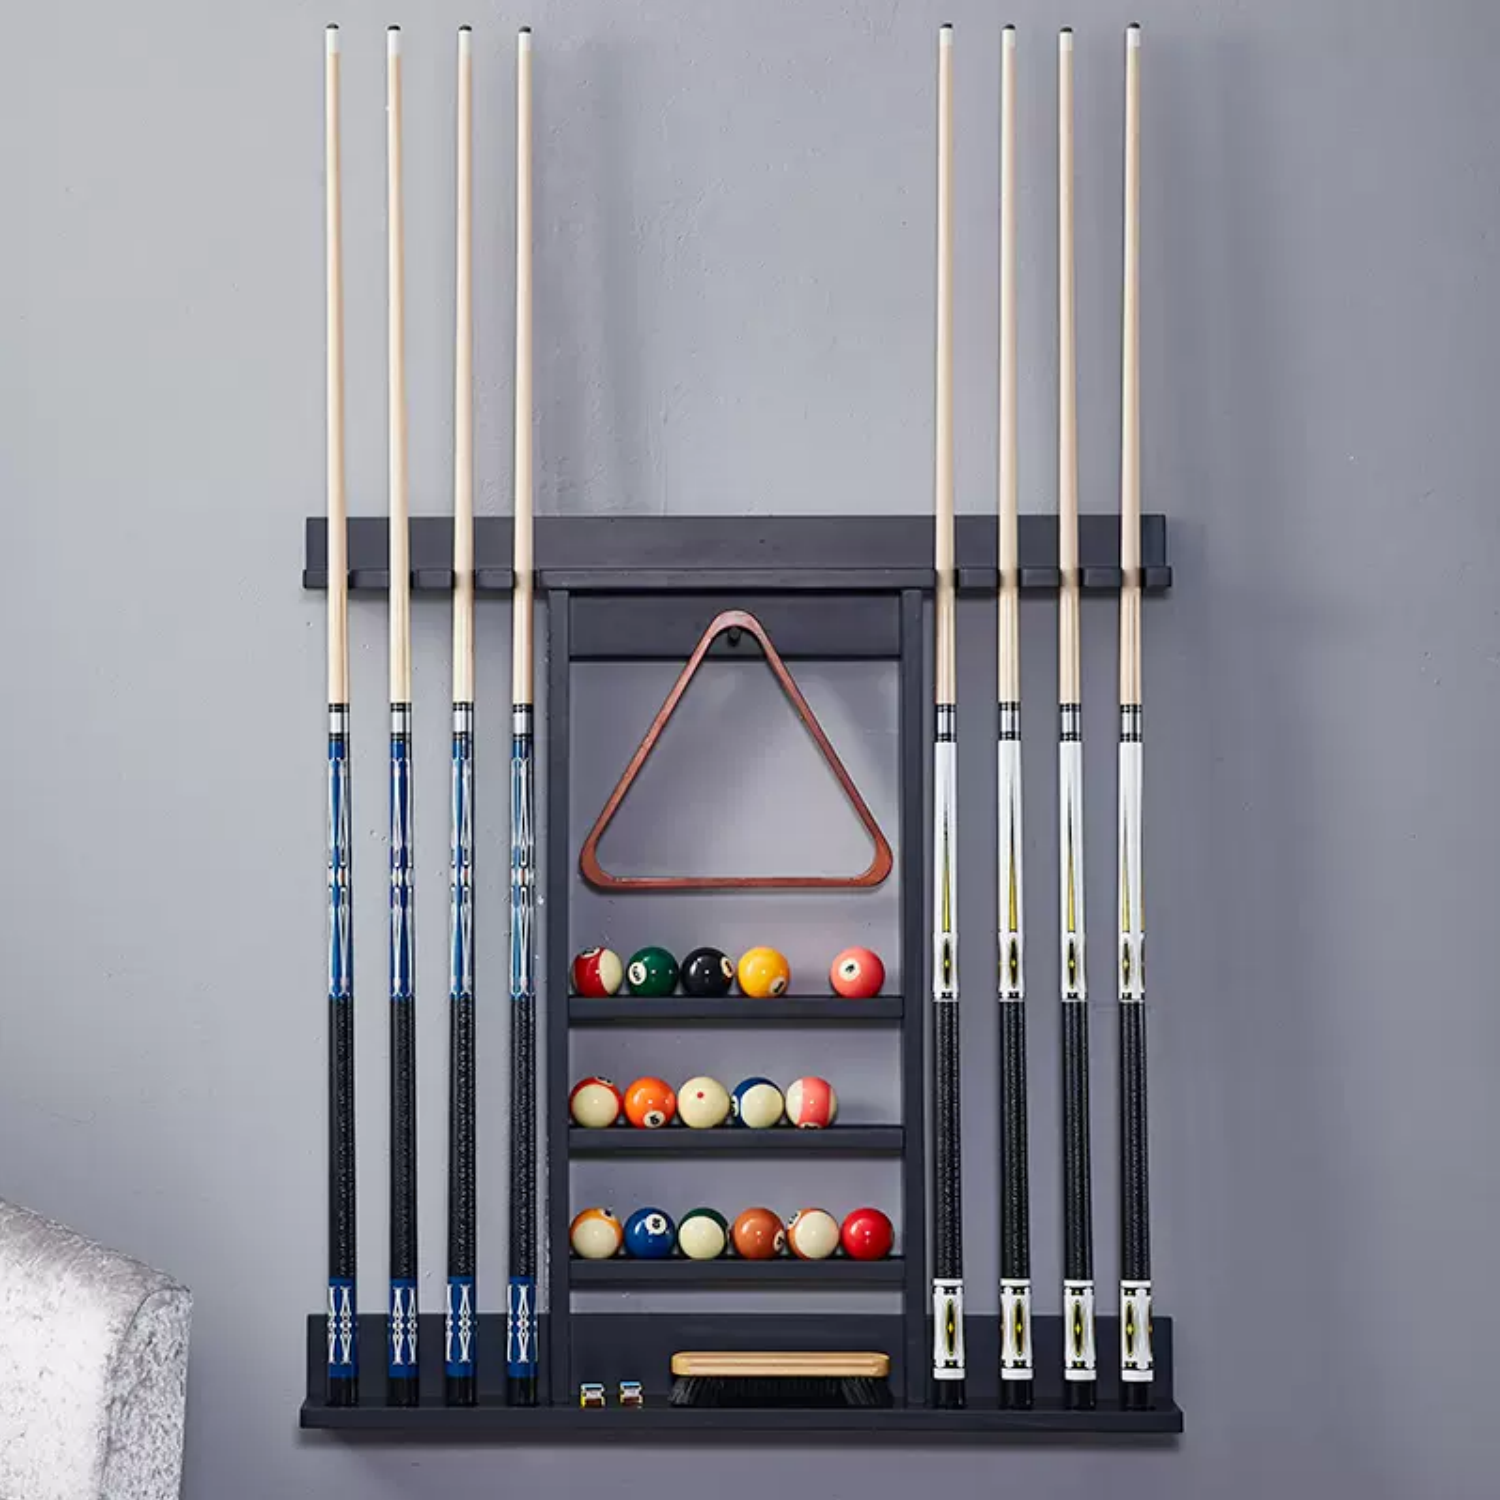 Billiard Wall Rack With 8 Holes - Solid Wood Black